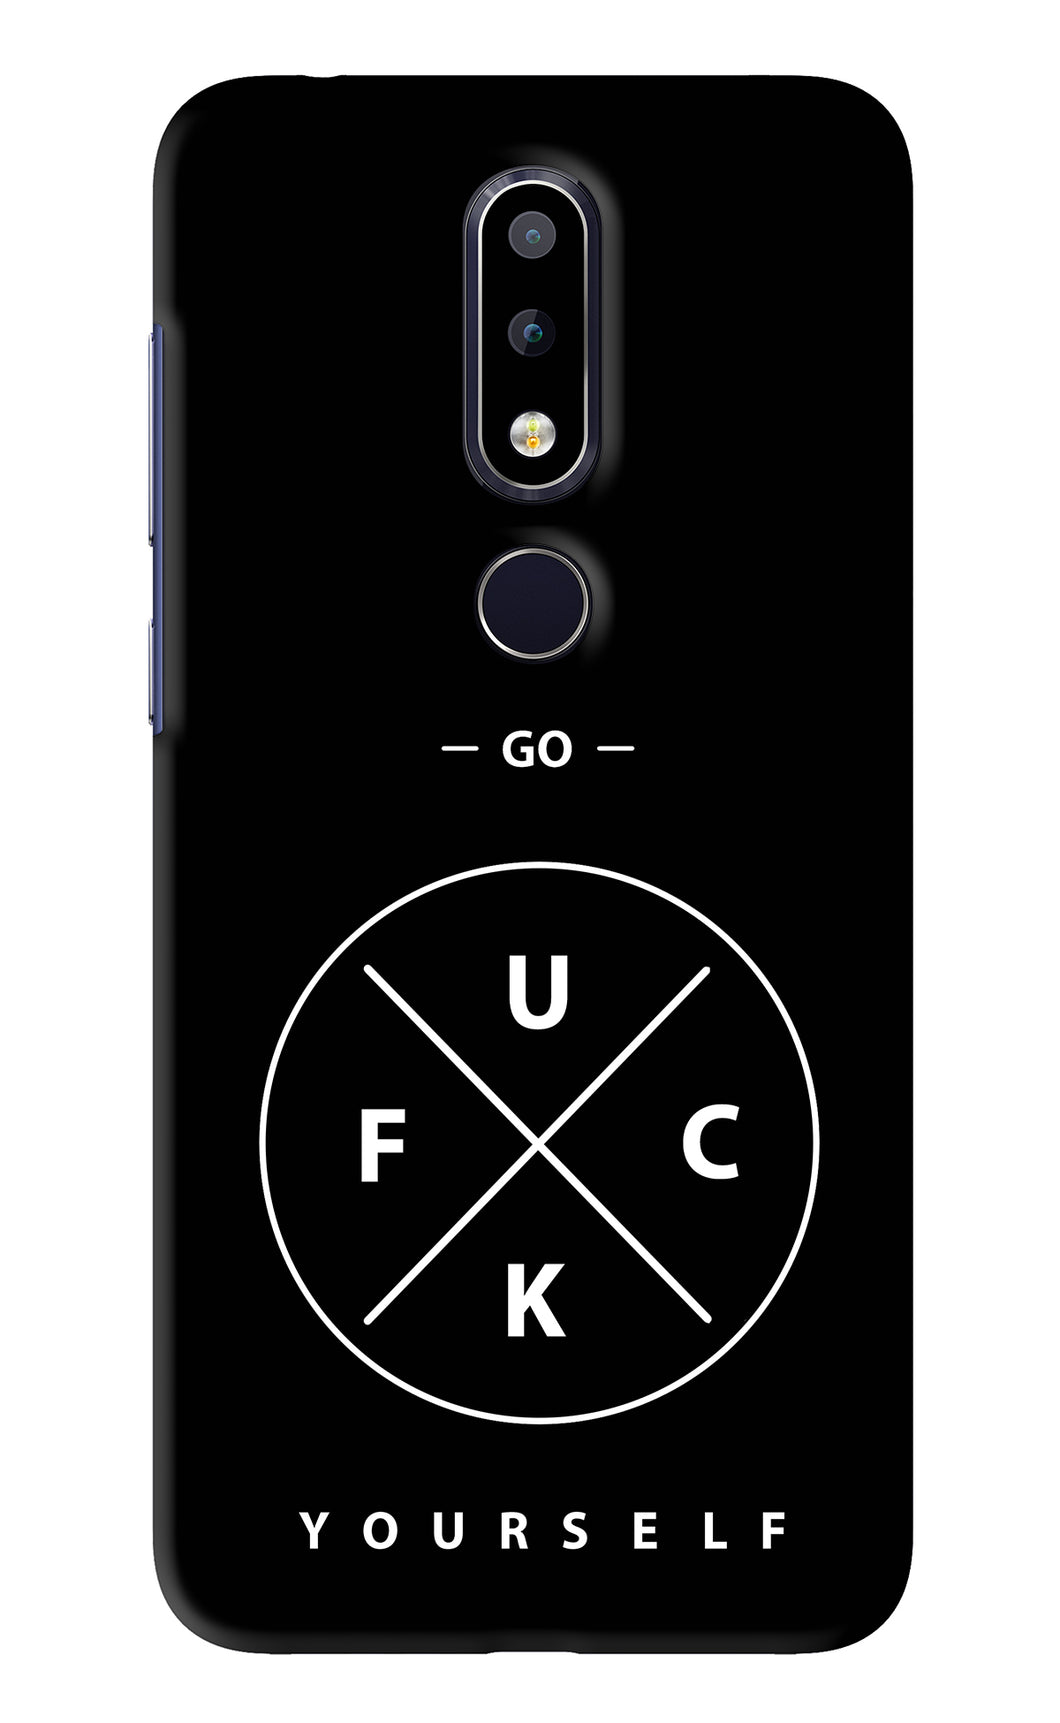 Go Fuck Yourself Nokia 6 2017 Back Skin Wrap